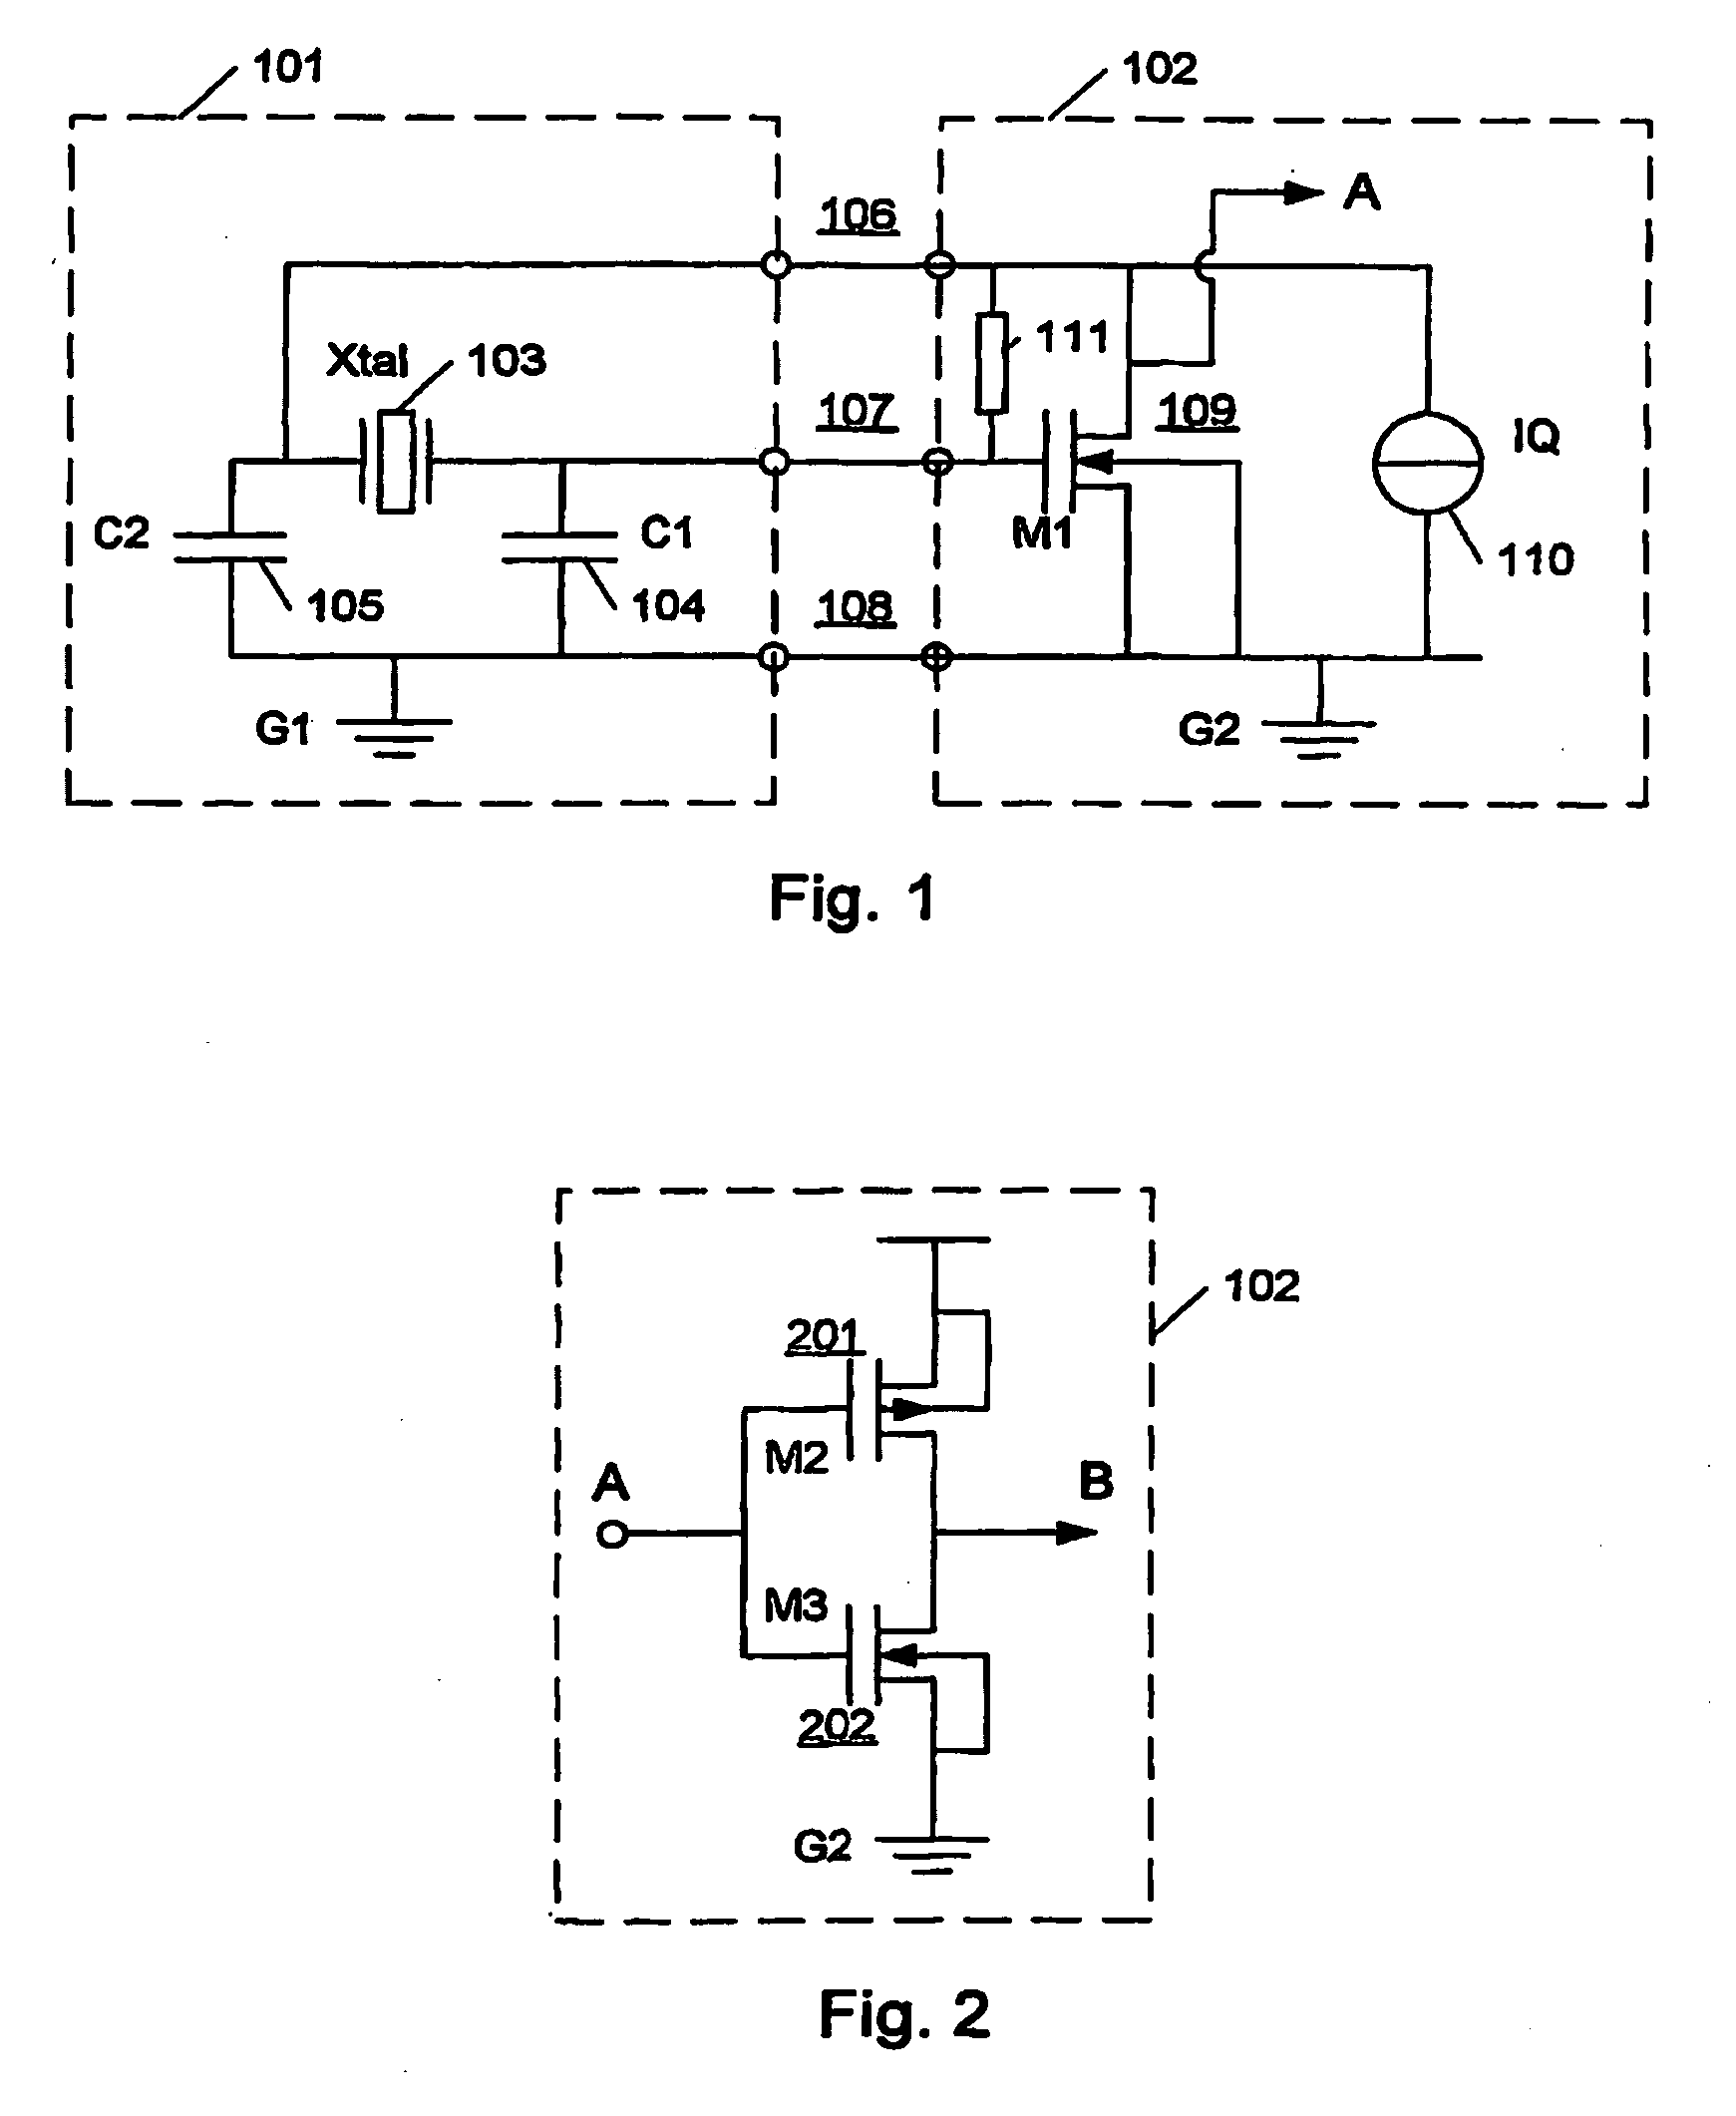 Electrical oscillator circuit and an integrated circuit